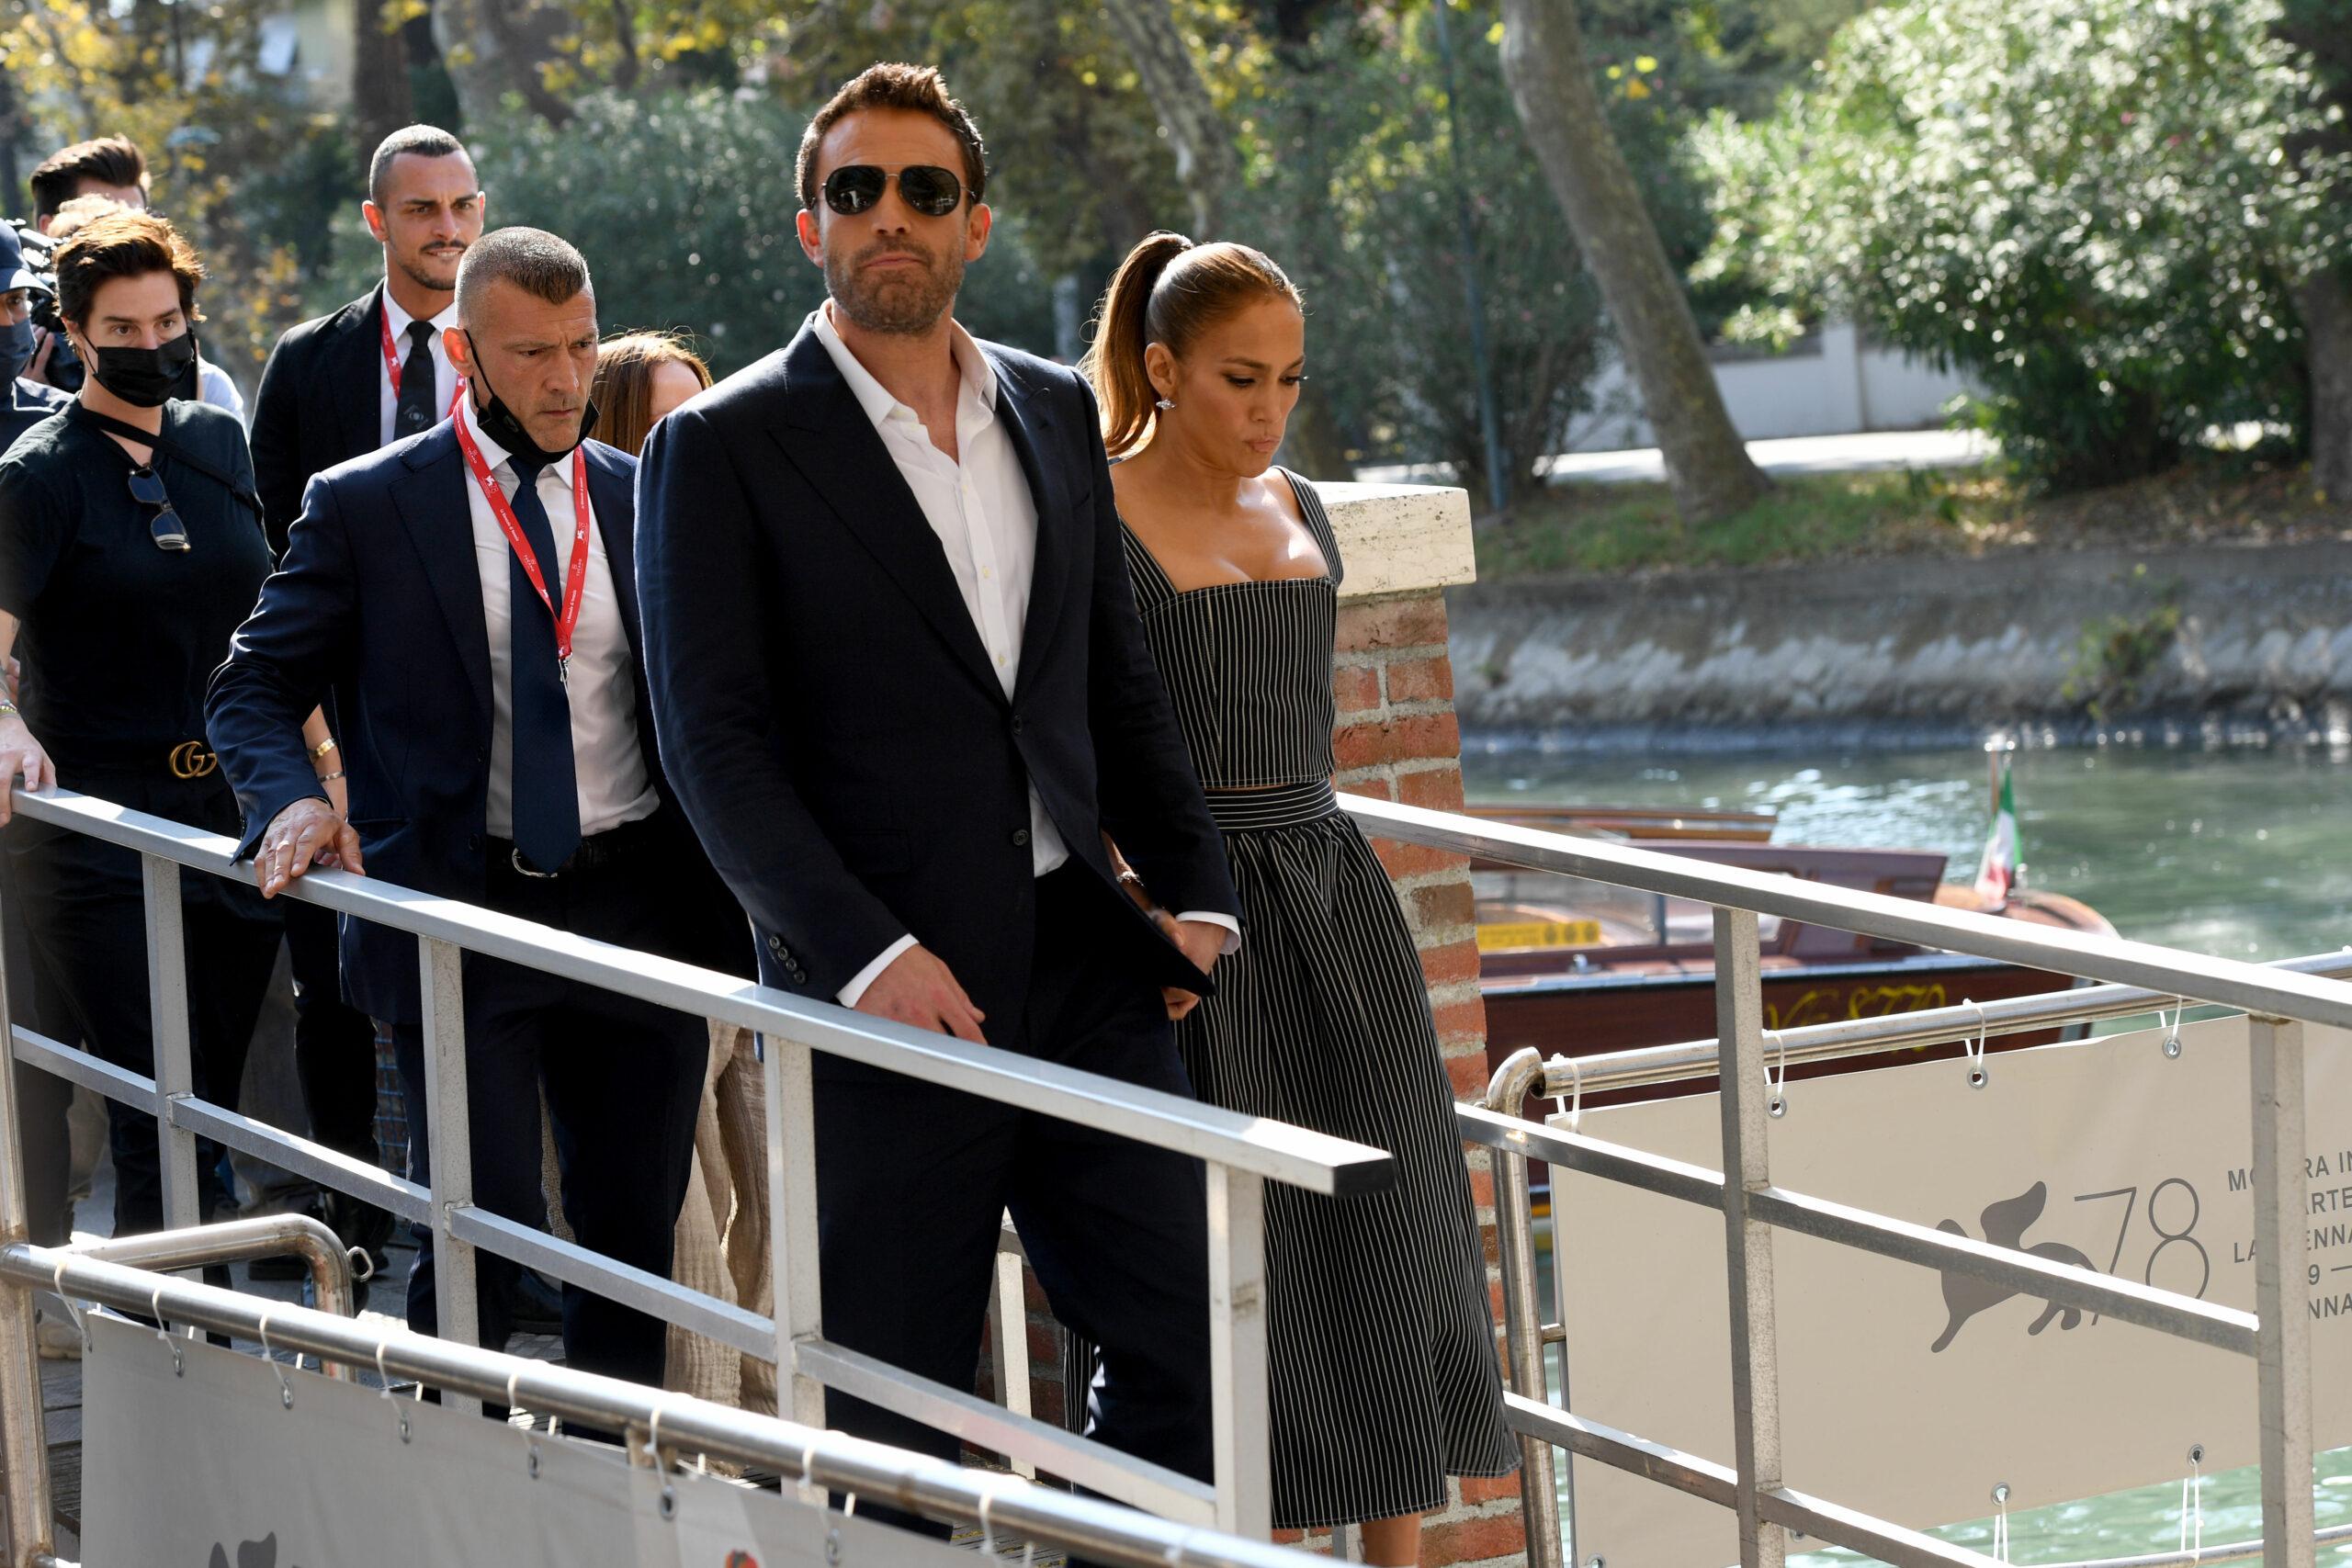 Ben Affleck and Jennifer Lopez arrive at the 78th Venice International Film Festival